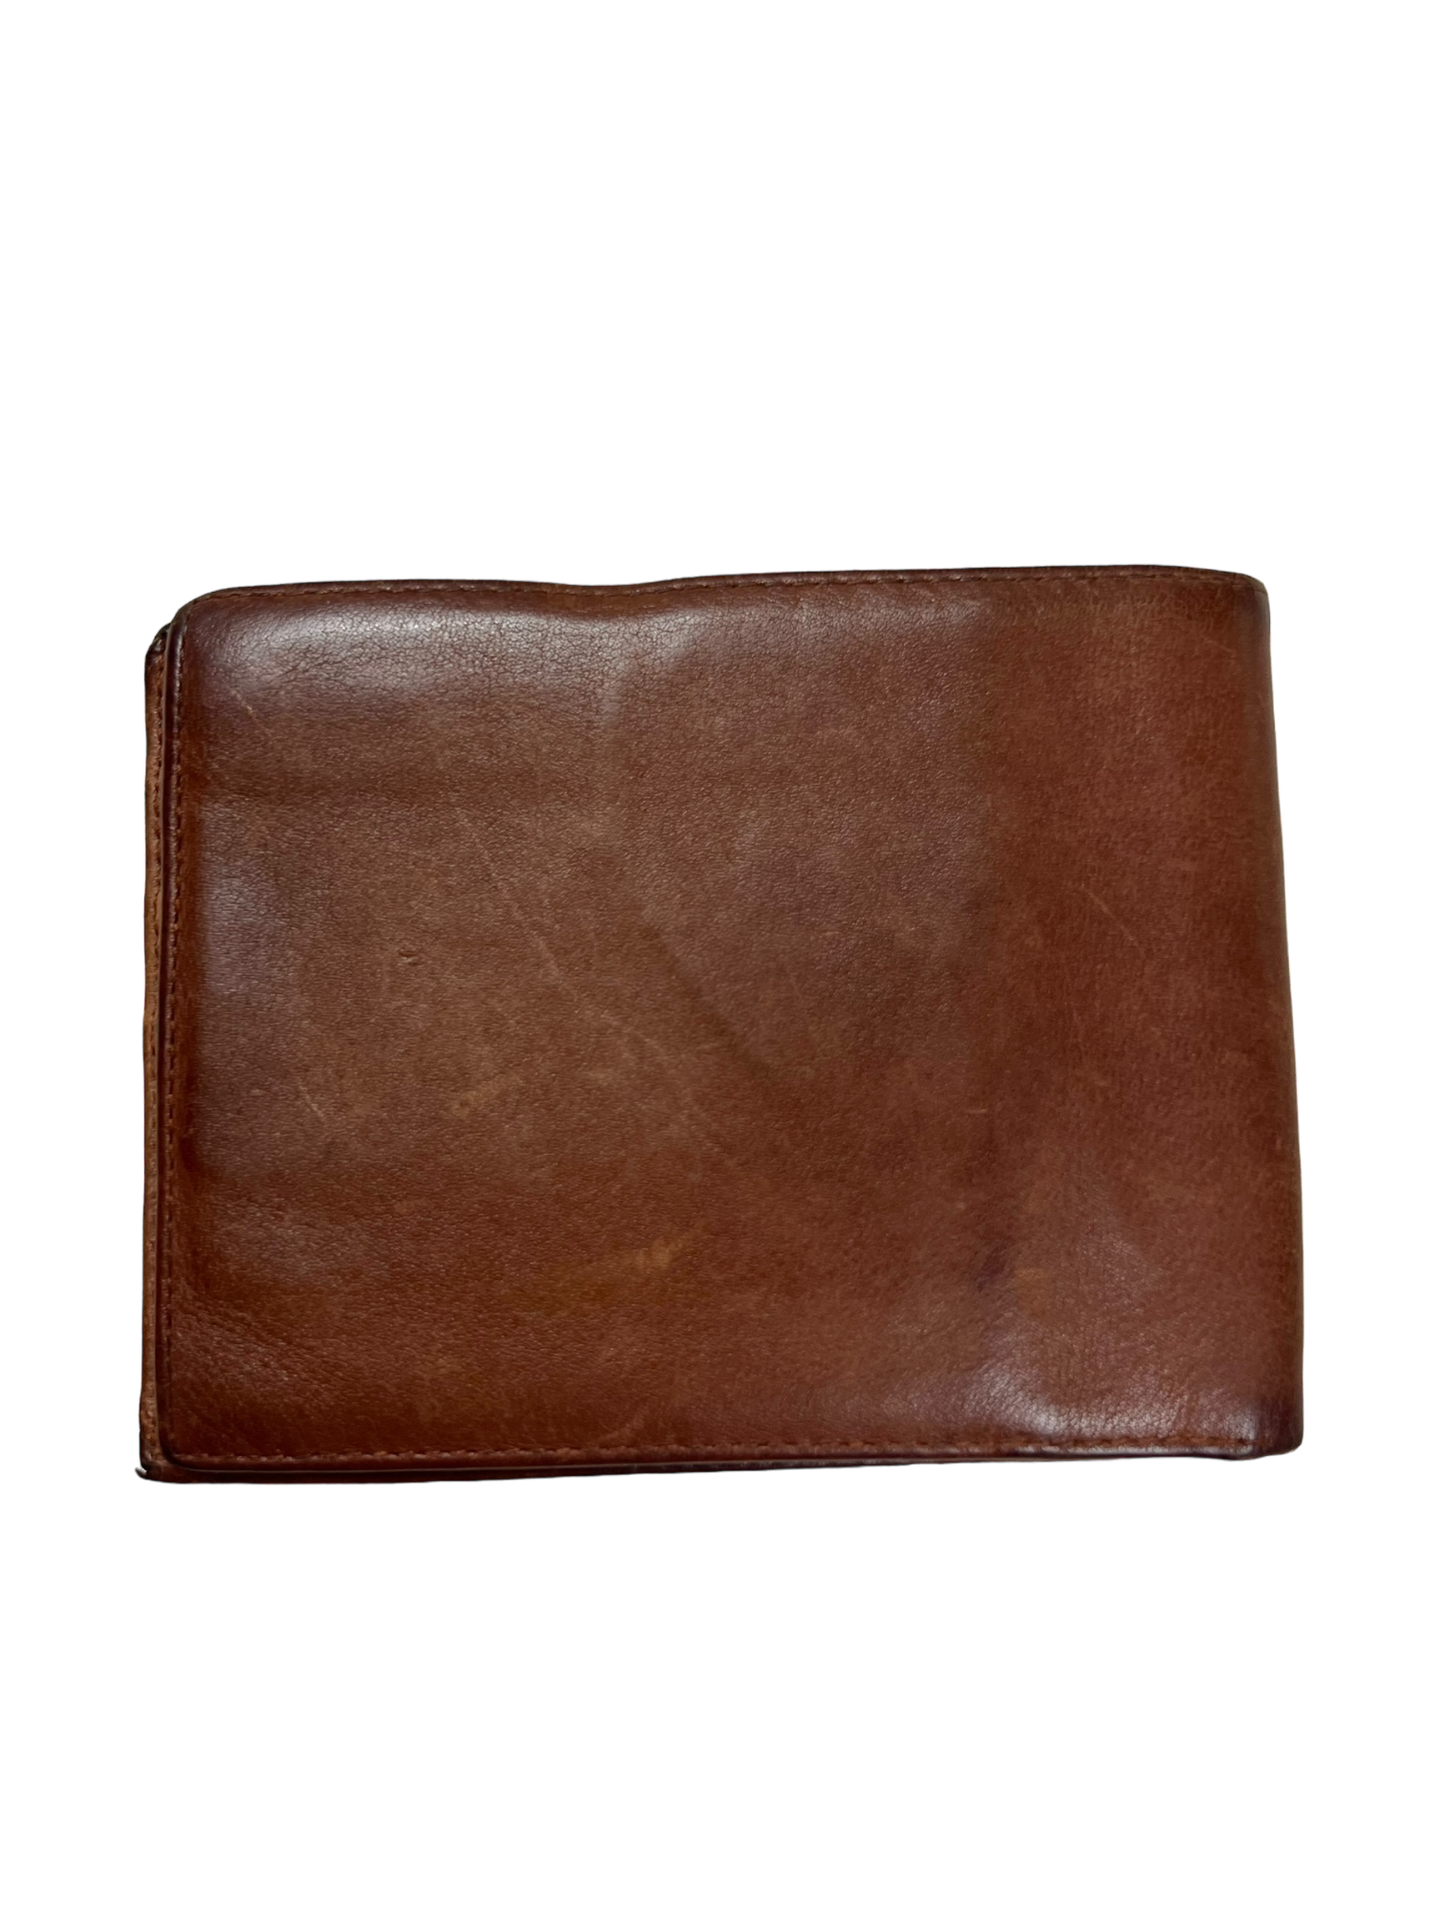 Balenciaga vintage leather wallet